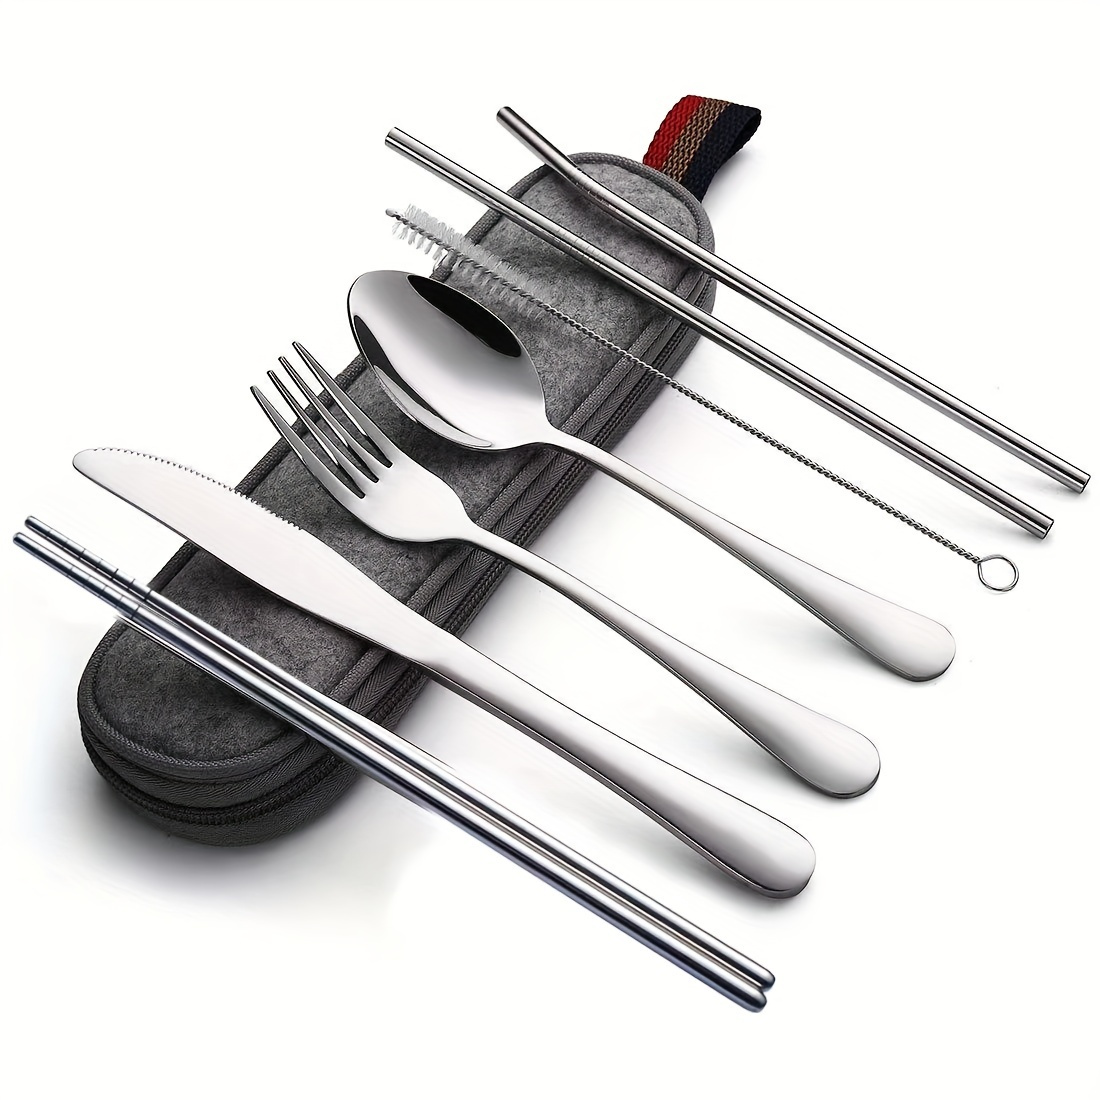 US$ 9.59 - Berglander Portable Utensils,Travel Camping Flatware  Set,Stainless Steel Silverware Set,Include  Knive/Fork/Spoon/Chopsticks/Straws/Brush/Portable Case(Silver-8 Piece) … -  m.